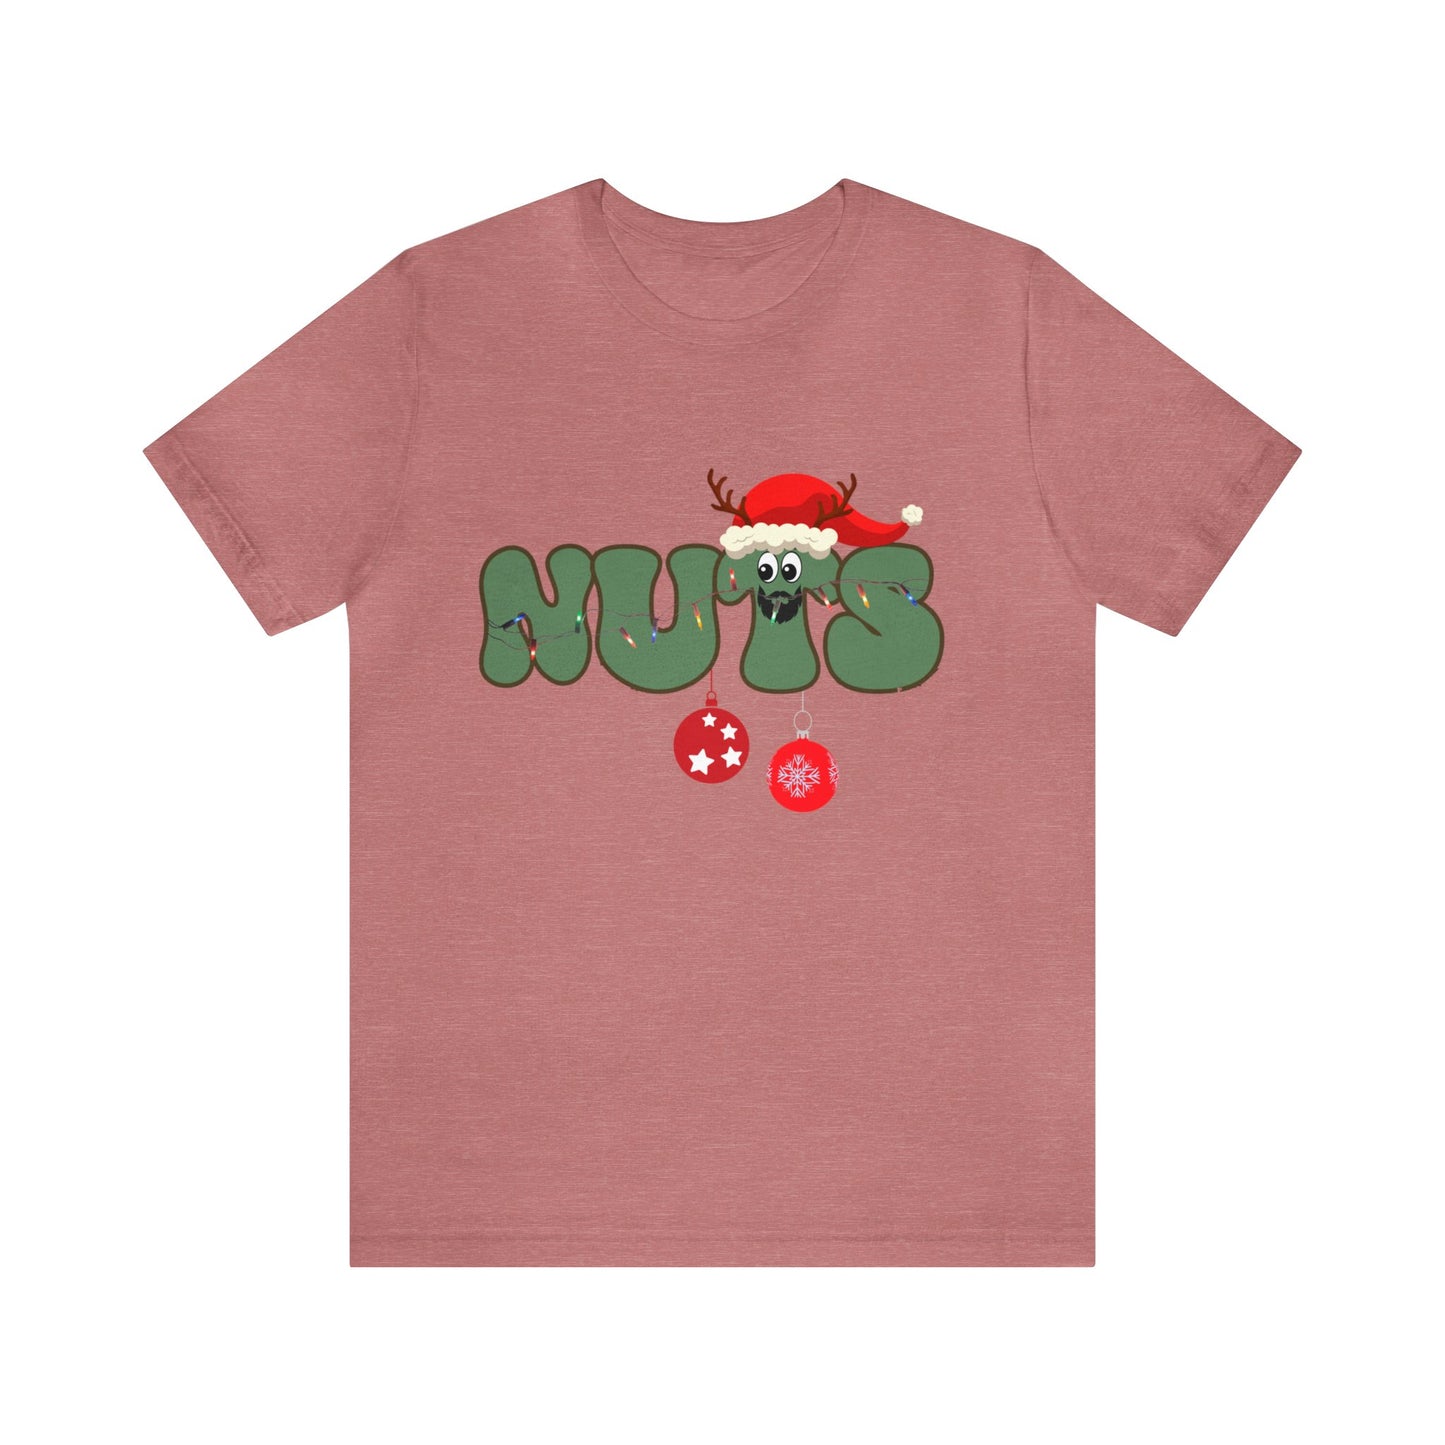 Couple Chest Nuts Shirt, Christmas Holiday T shirt, Christmas Gift for Couples, Funny Matching Christmas Shirt, T949